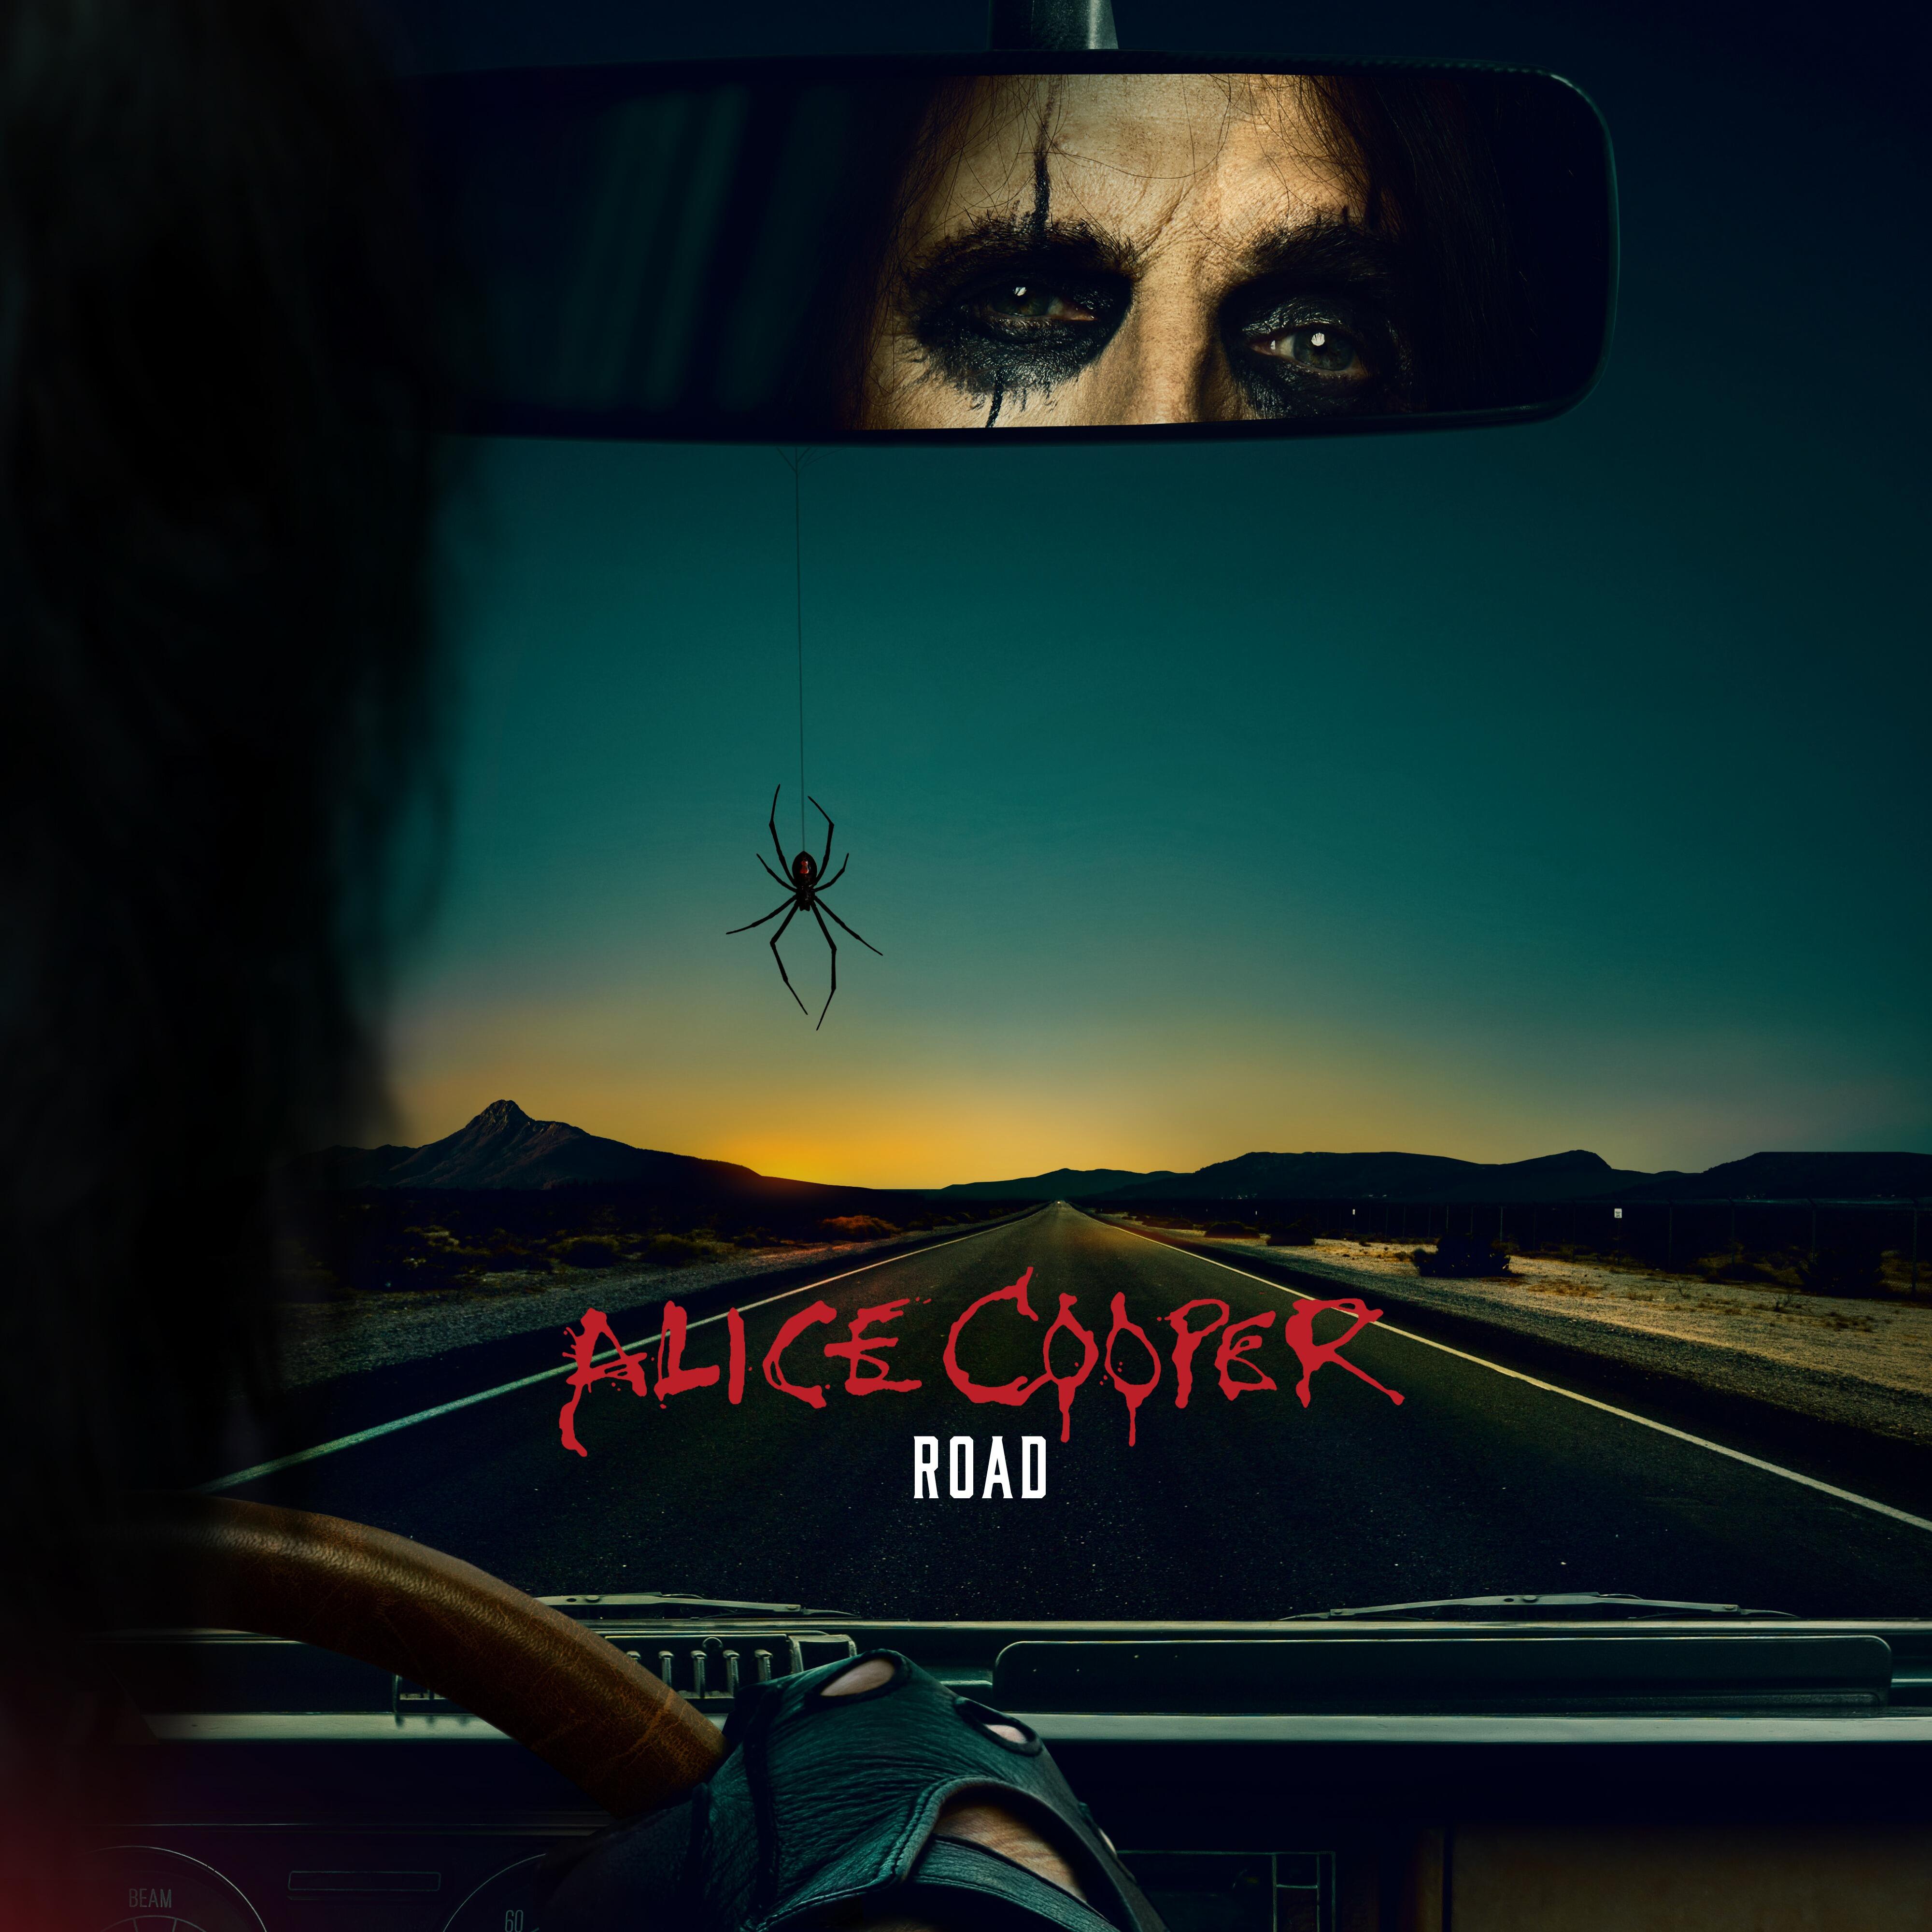 Cd roads. Alice Cooper Road 2023. Элис Купер 2023. Road Элис Купер. Элис Купер альбом Road обложка.